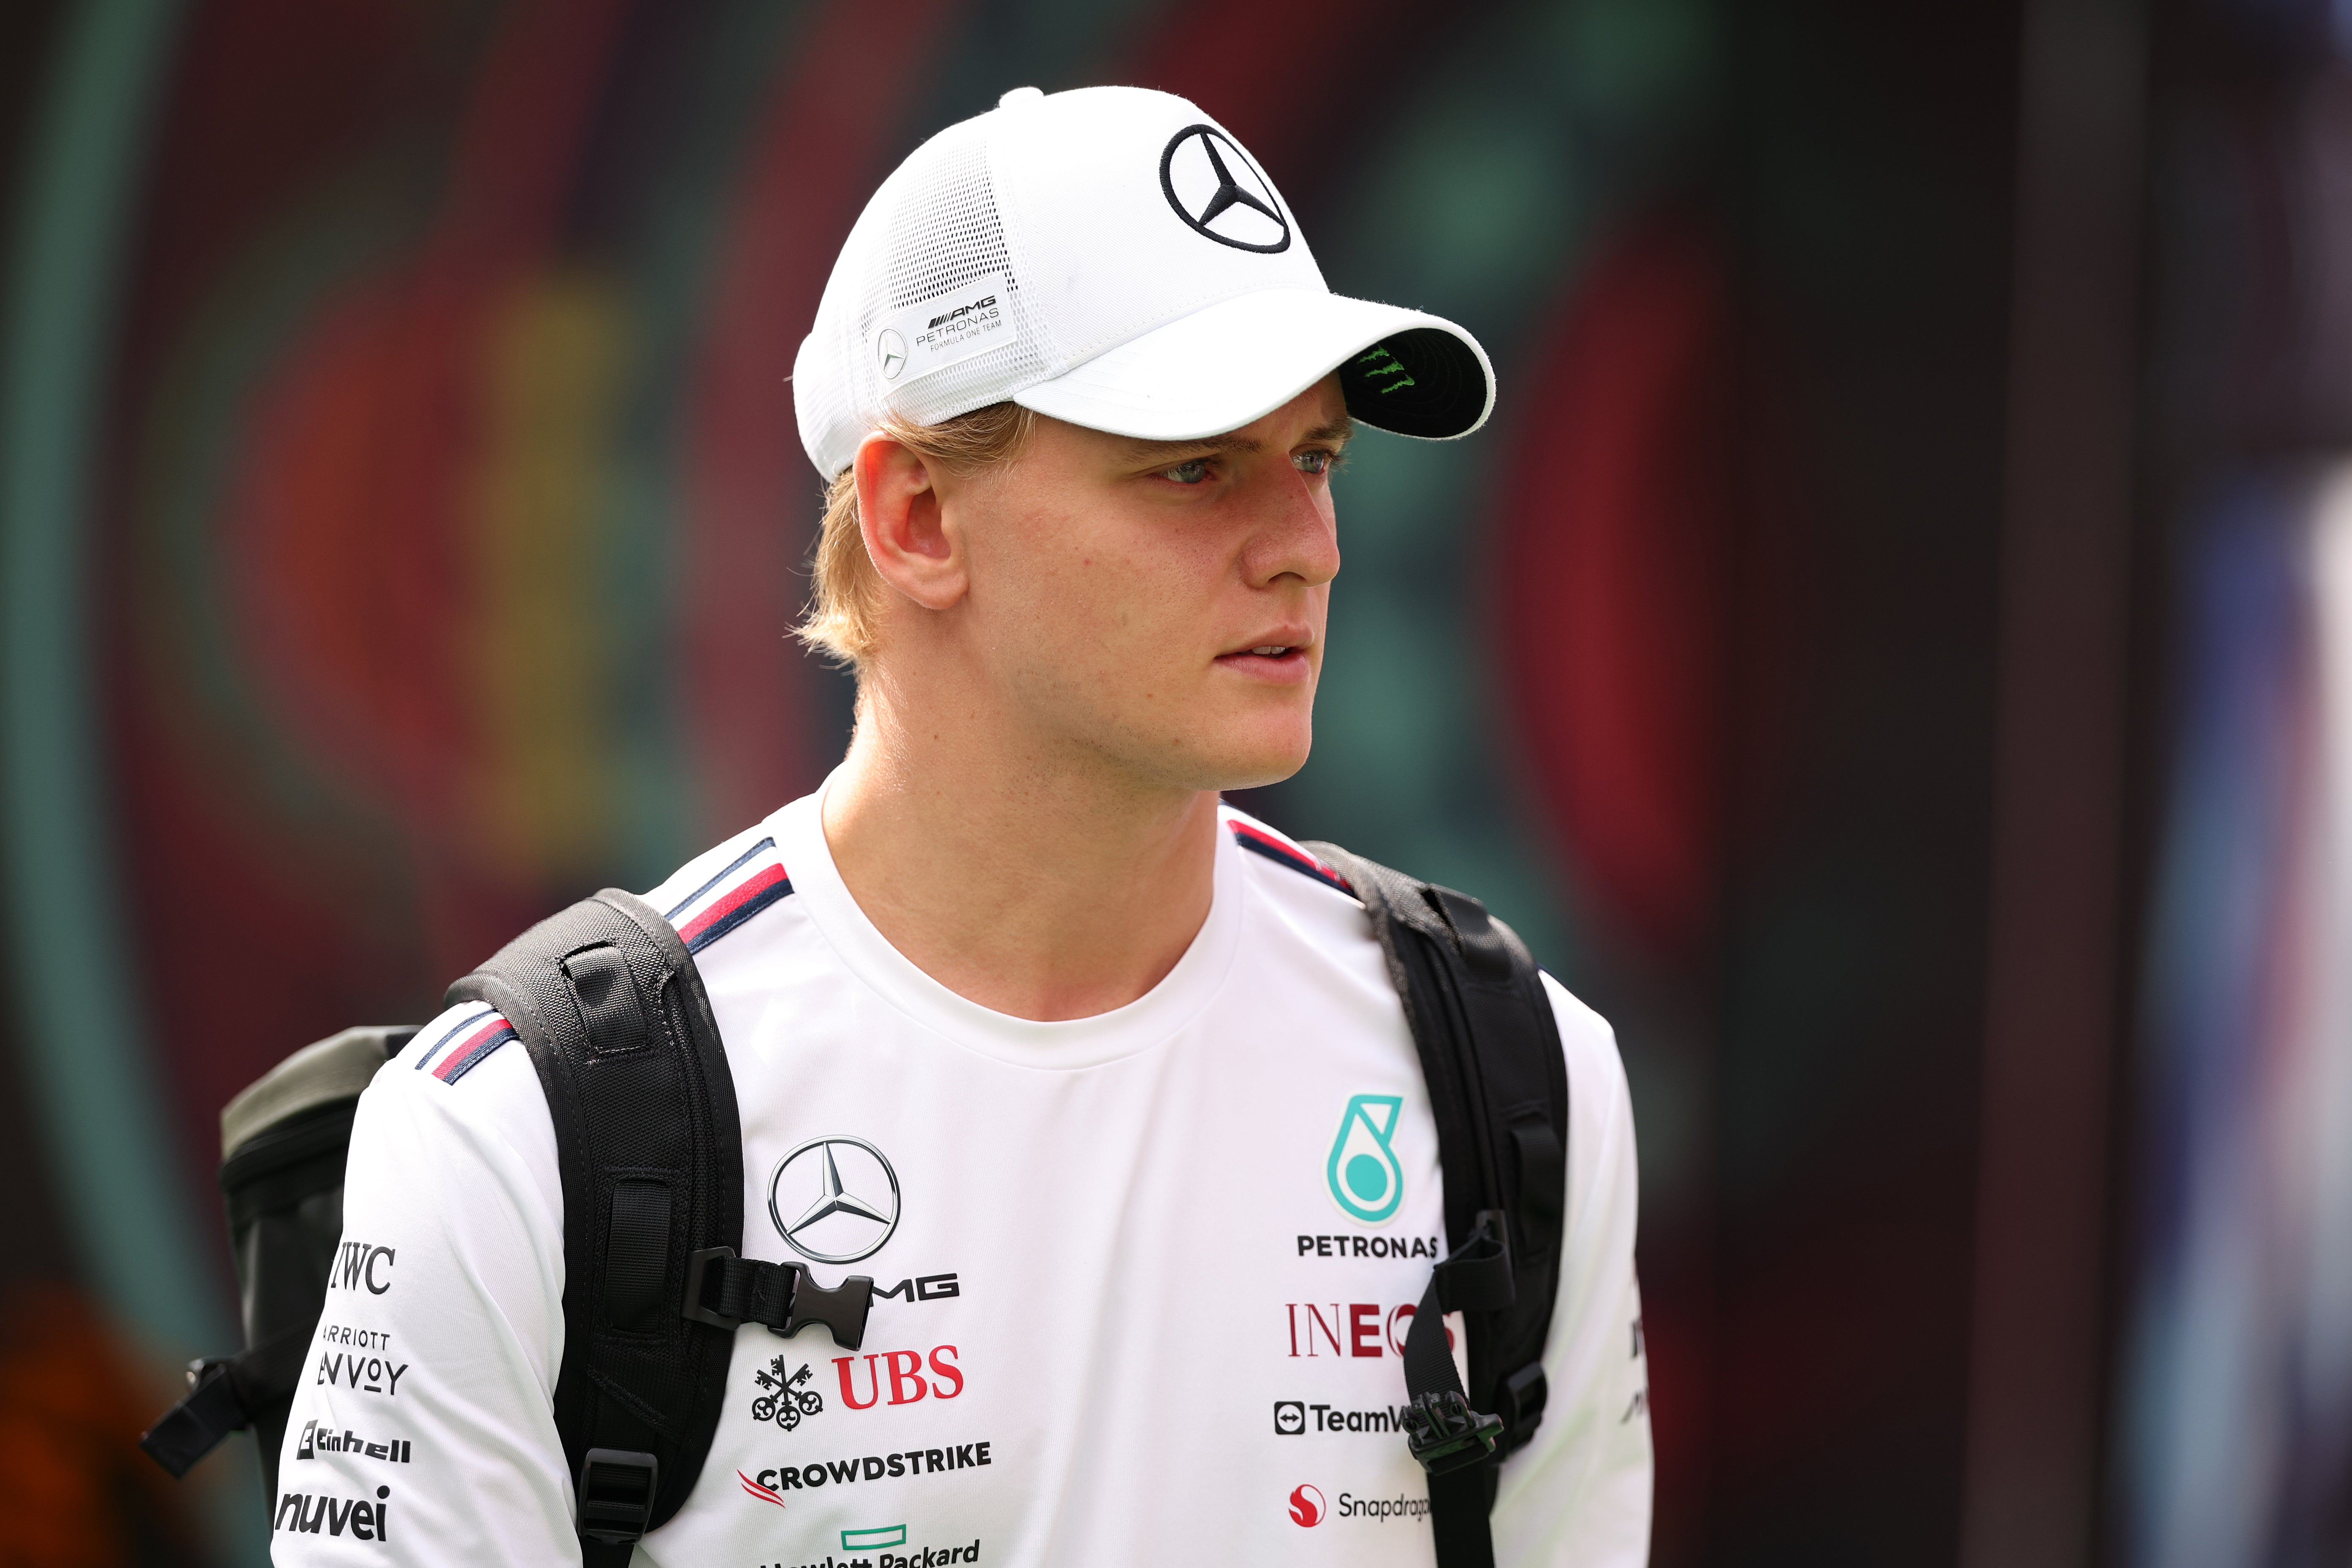 Mick Schumacher is a reserve driver at Mercedes